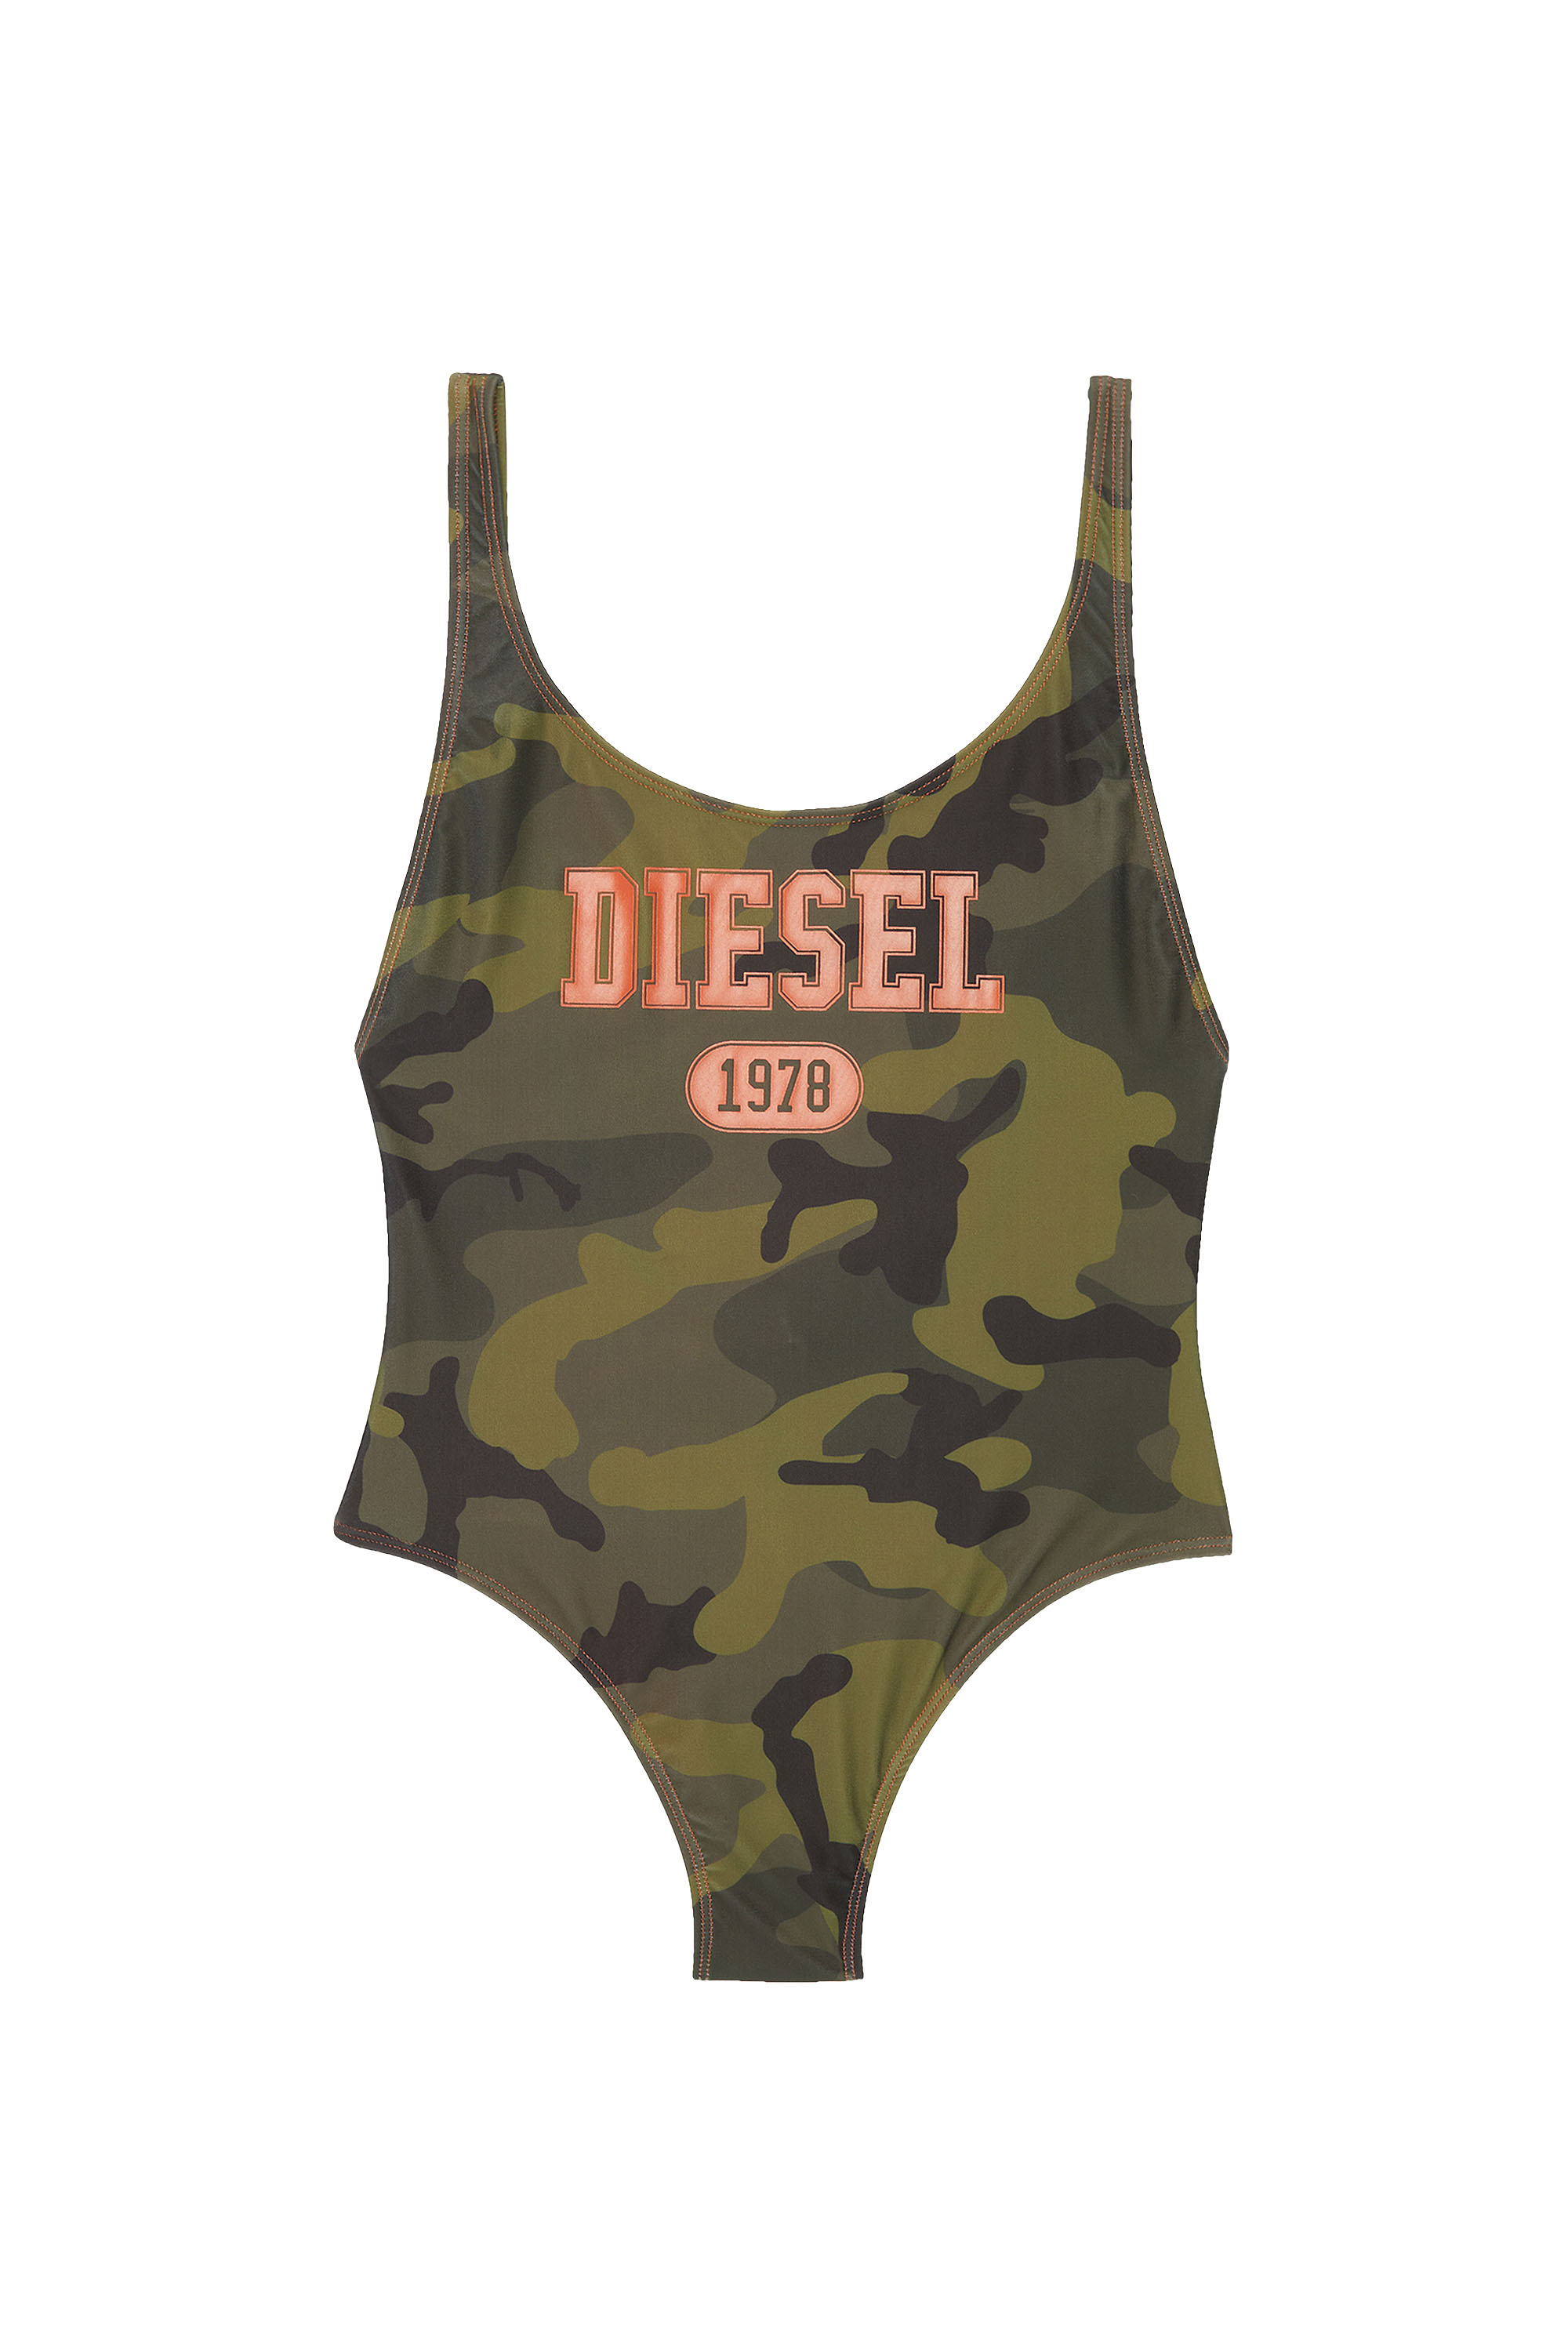 Diesel - BFSW-SLIA, Military Green - Image 1